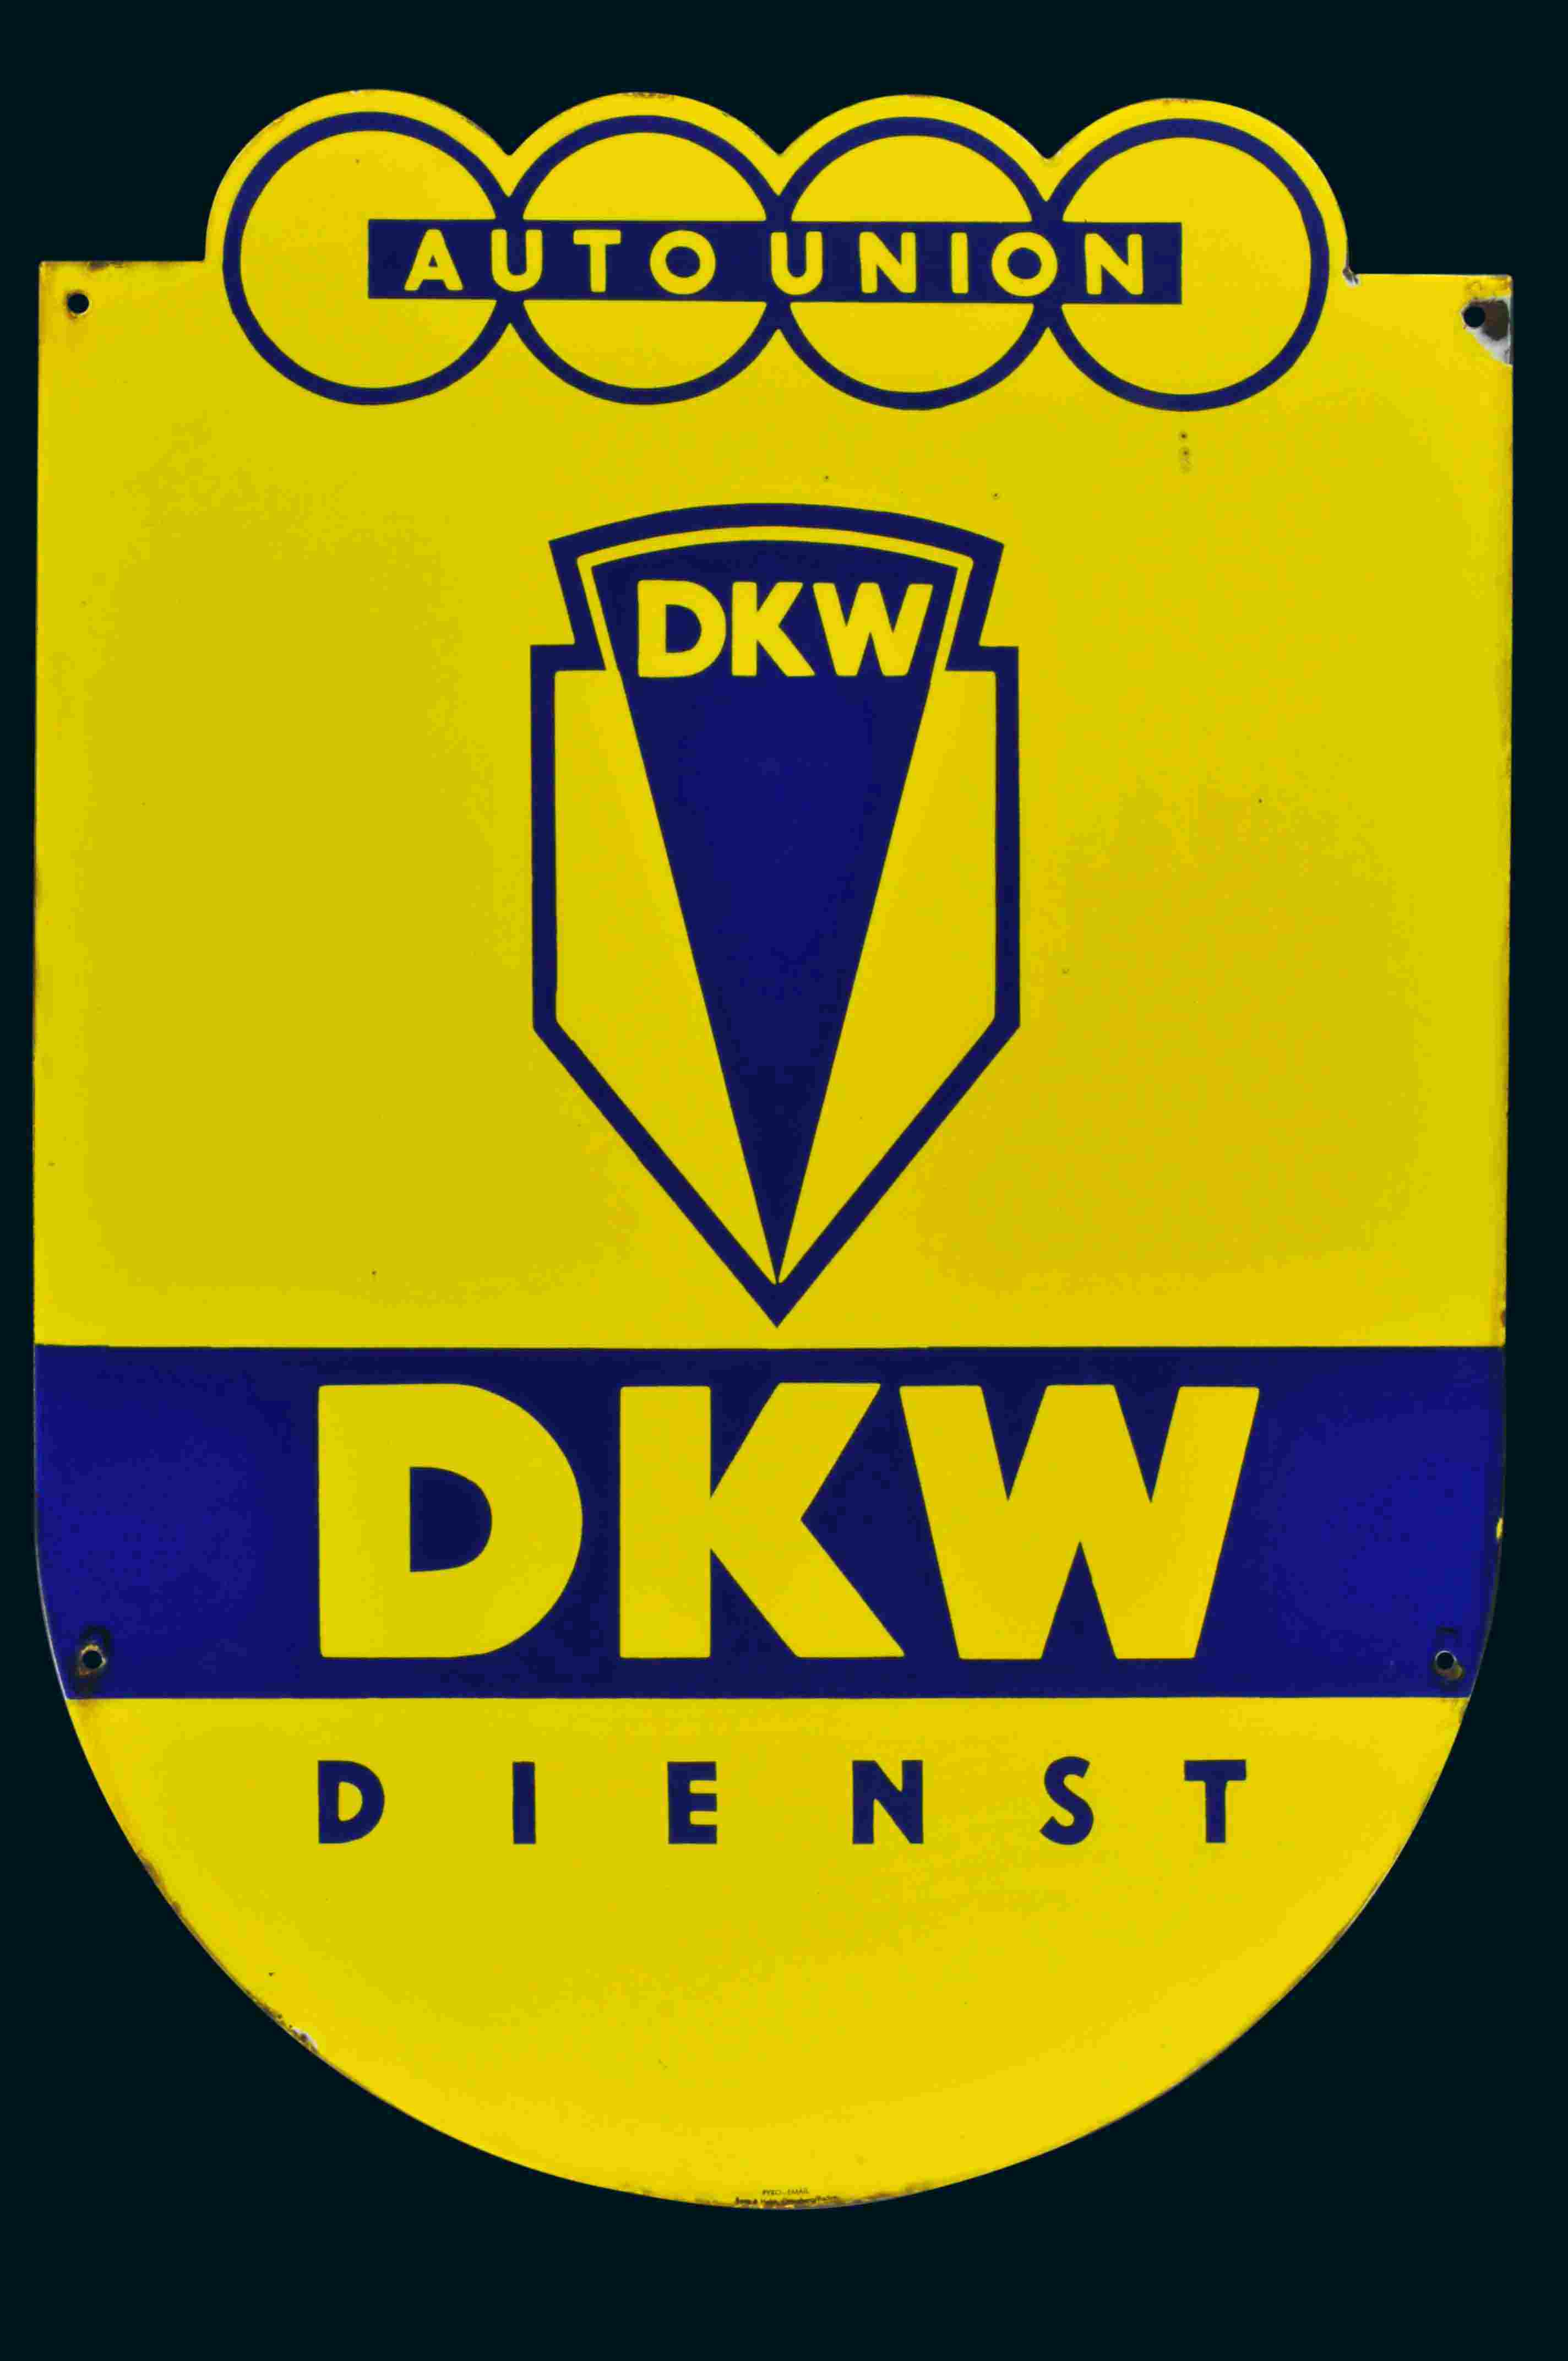 DKW Auto Union 